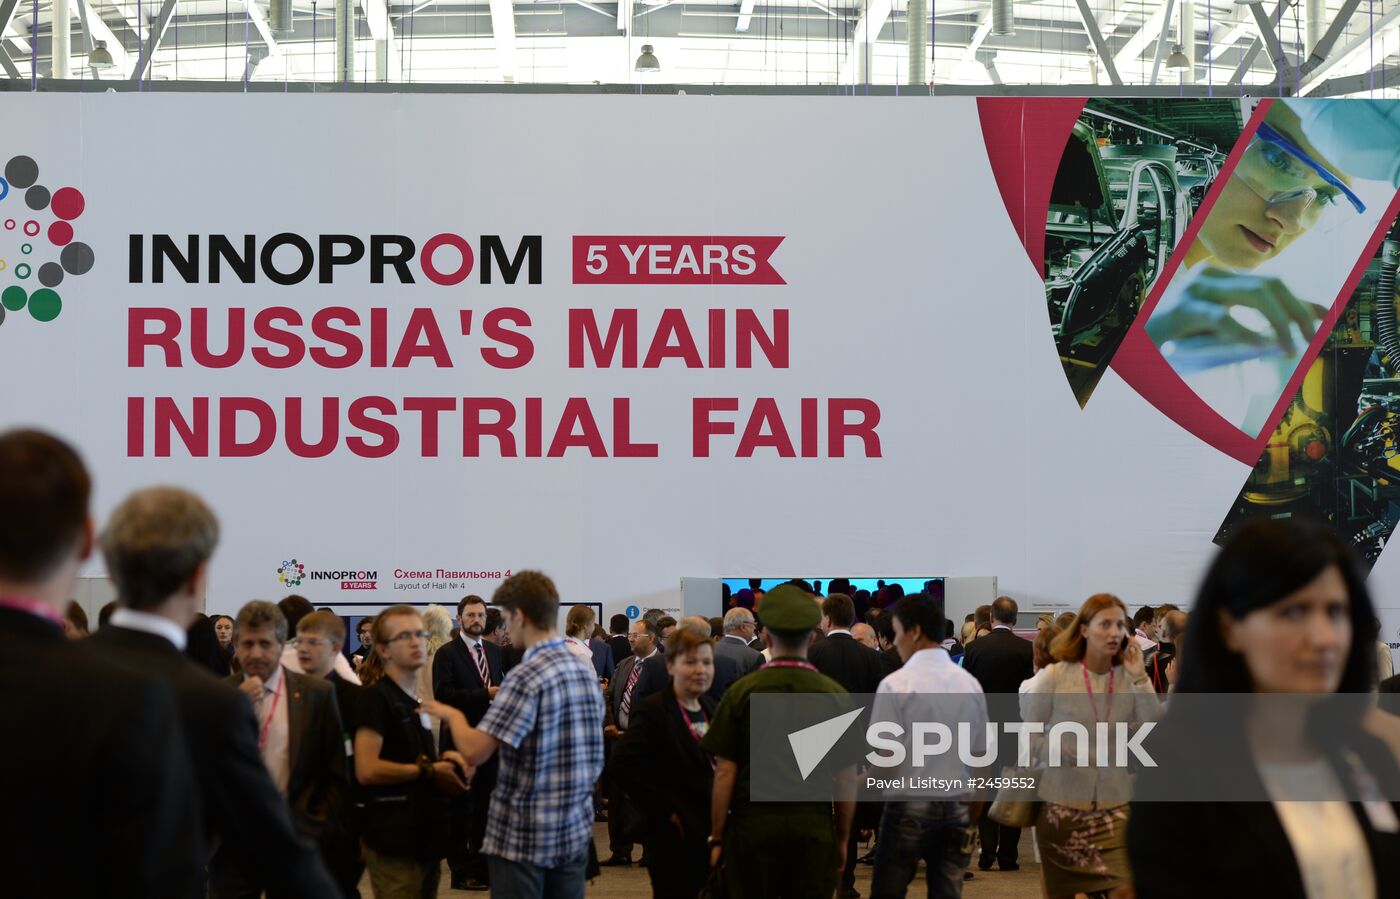 Innoprom international industrial trade fair opens in Yekaterinburg